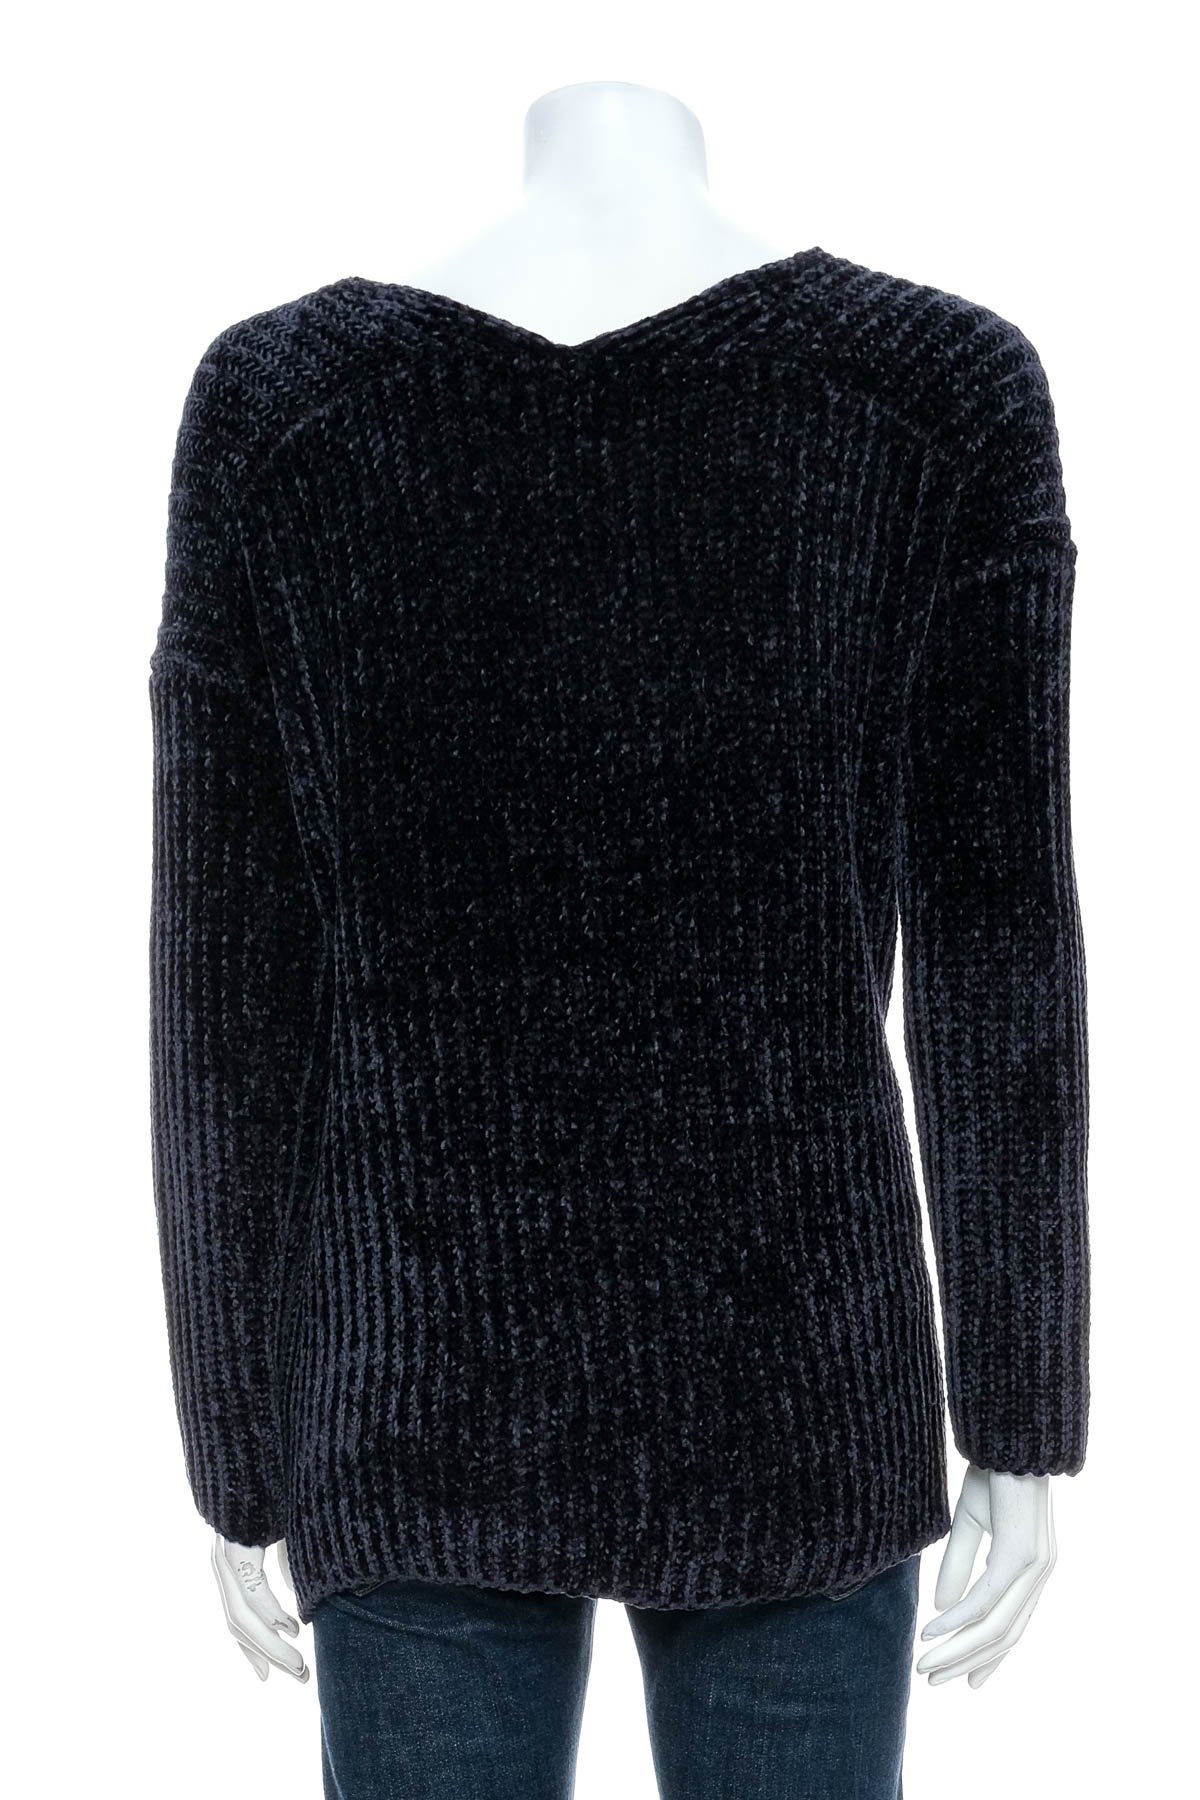 Women's sweater - Target - 1